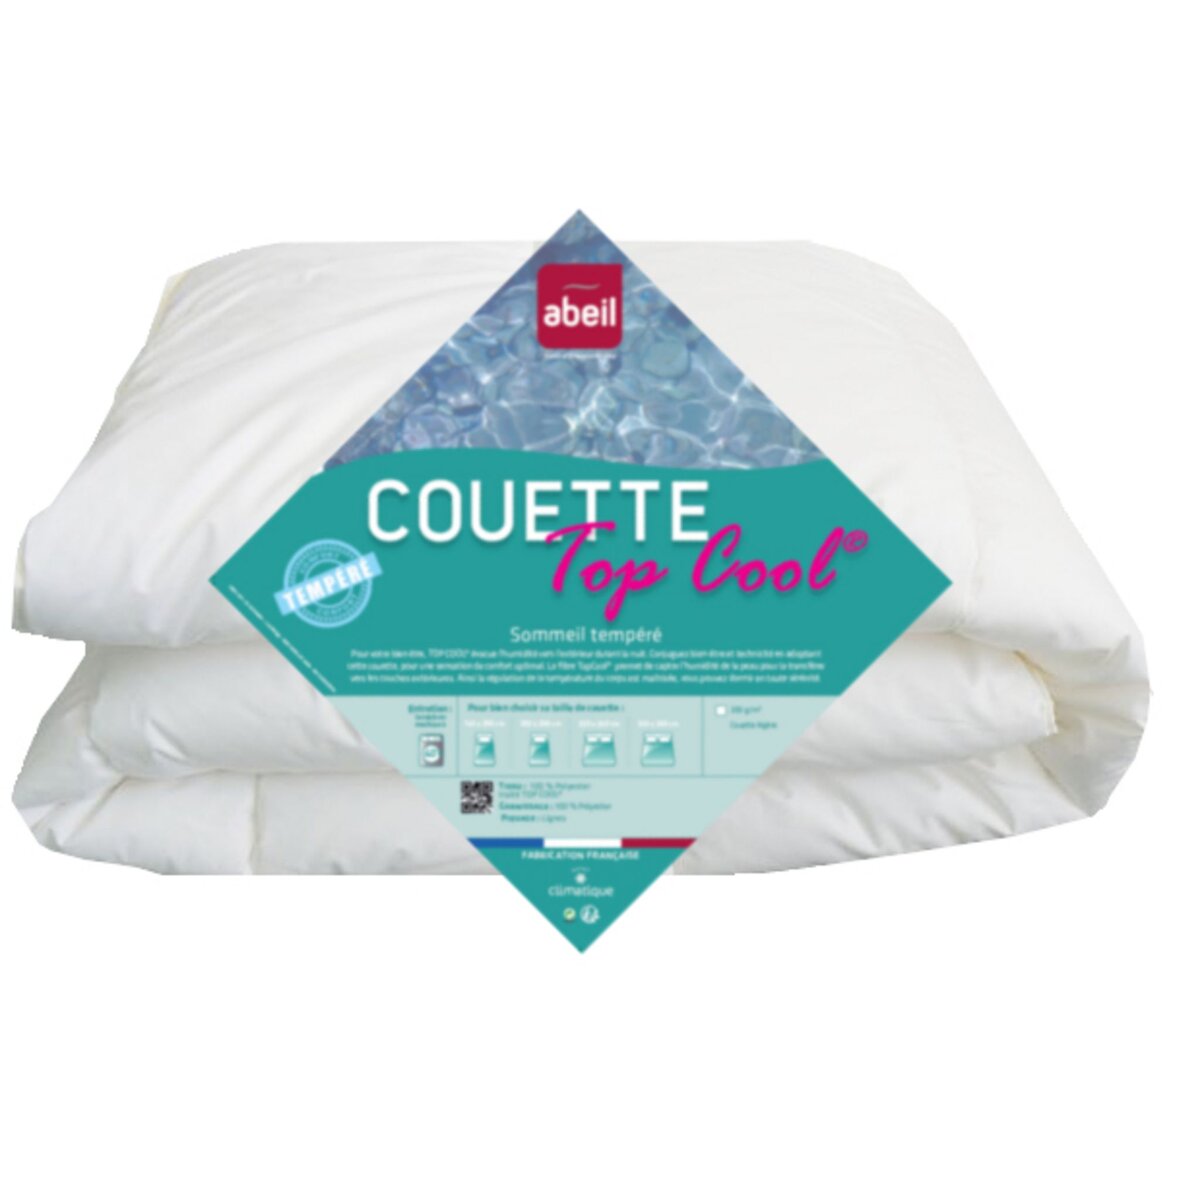 ABEIL Couette légère polyester anti transpiration TOP COOL